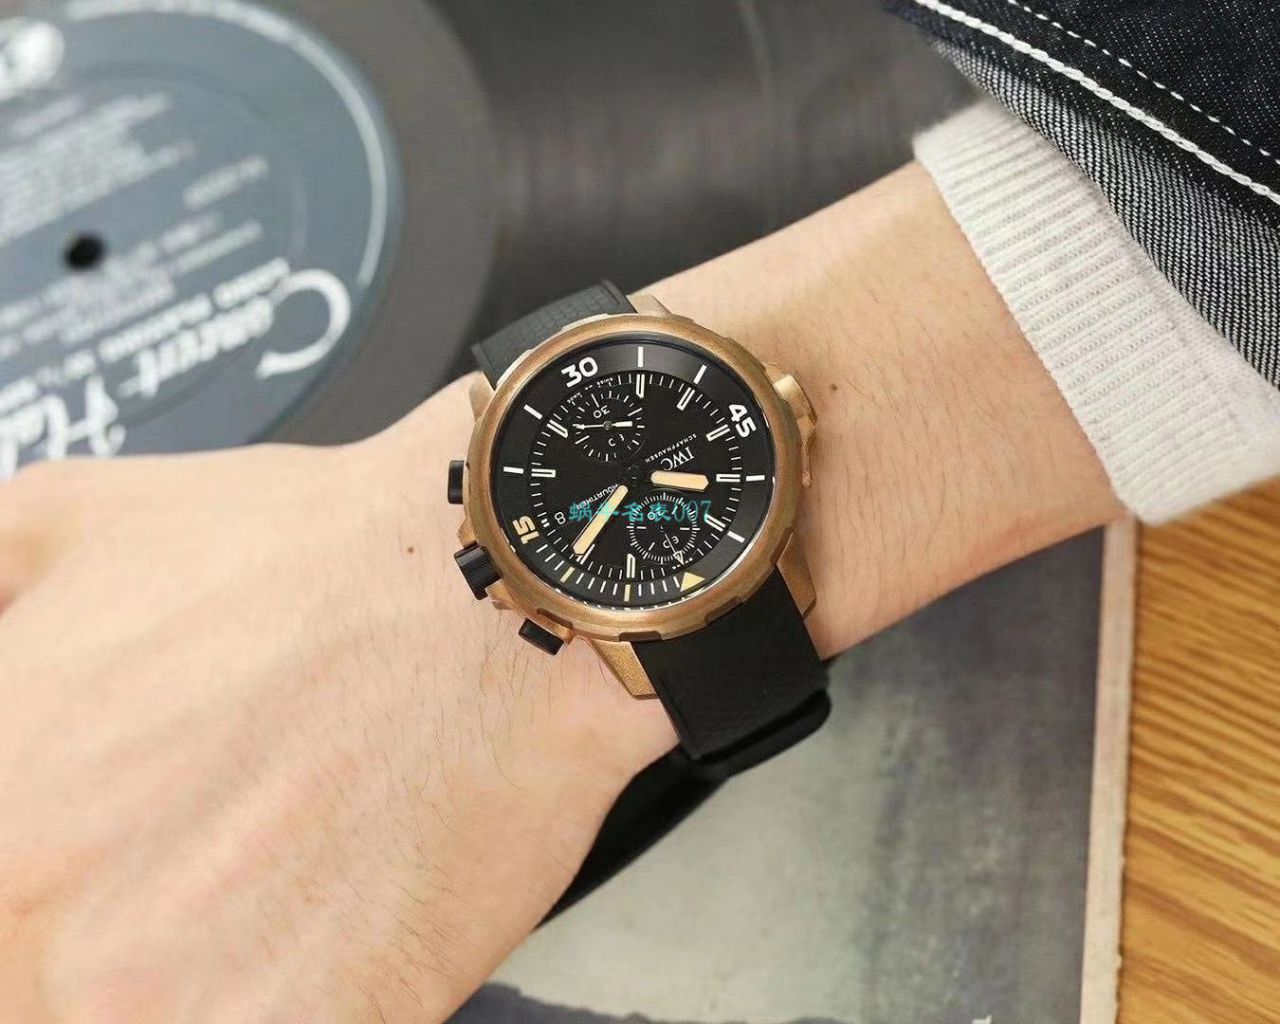 V6厂万国海洋时计复刻手表IW379503青铜达尔文探险之旅特别版  / WG582V6